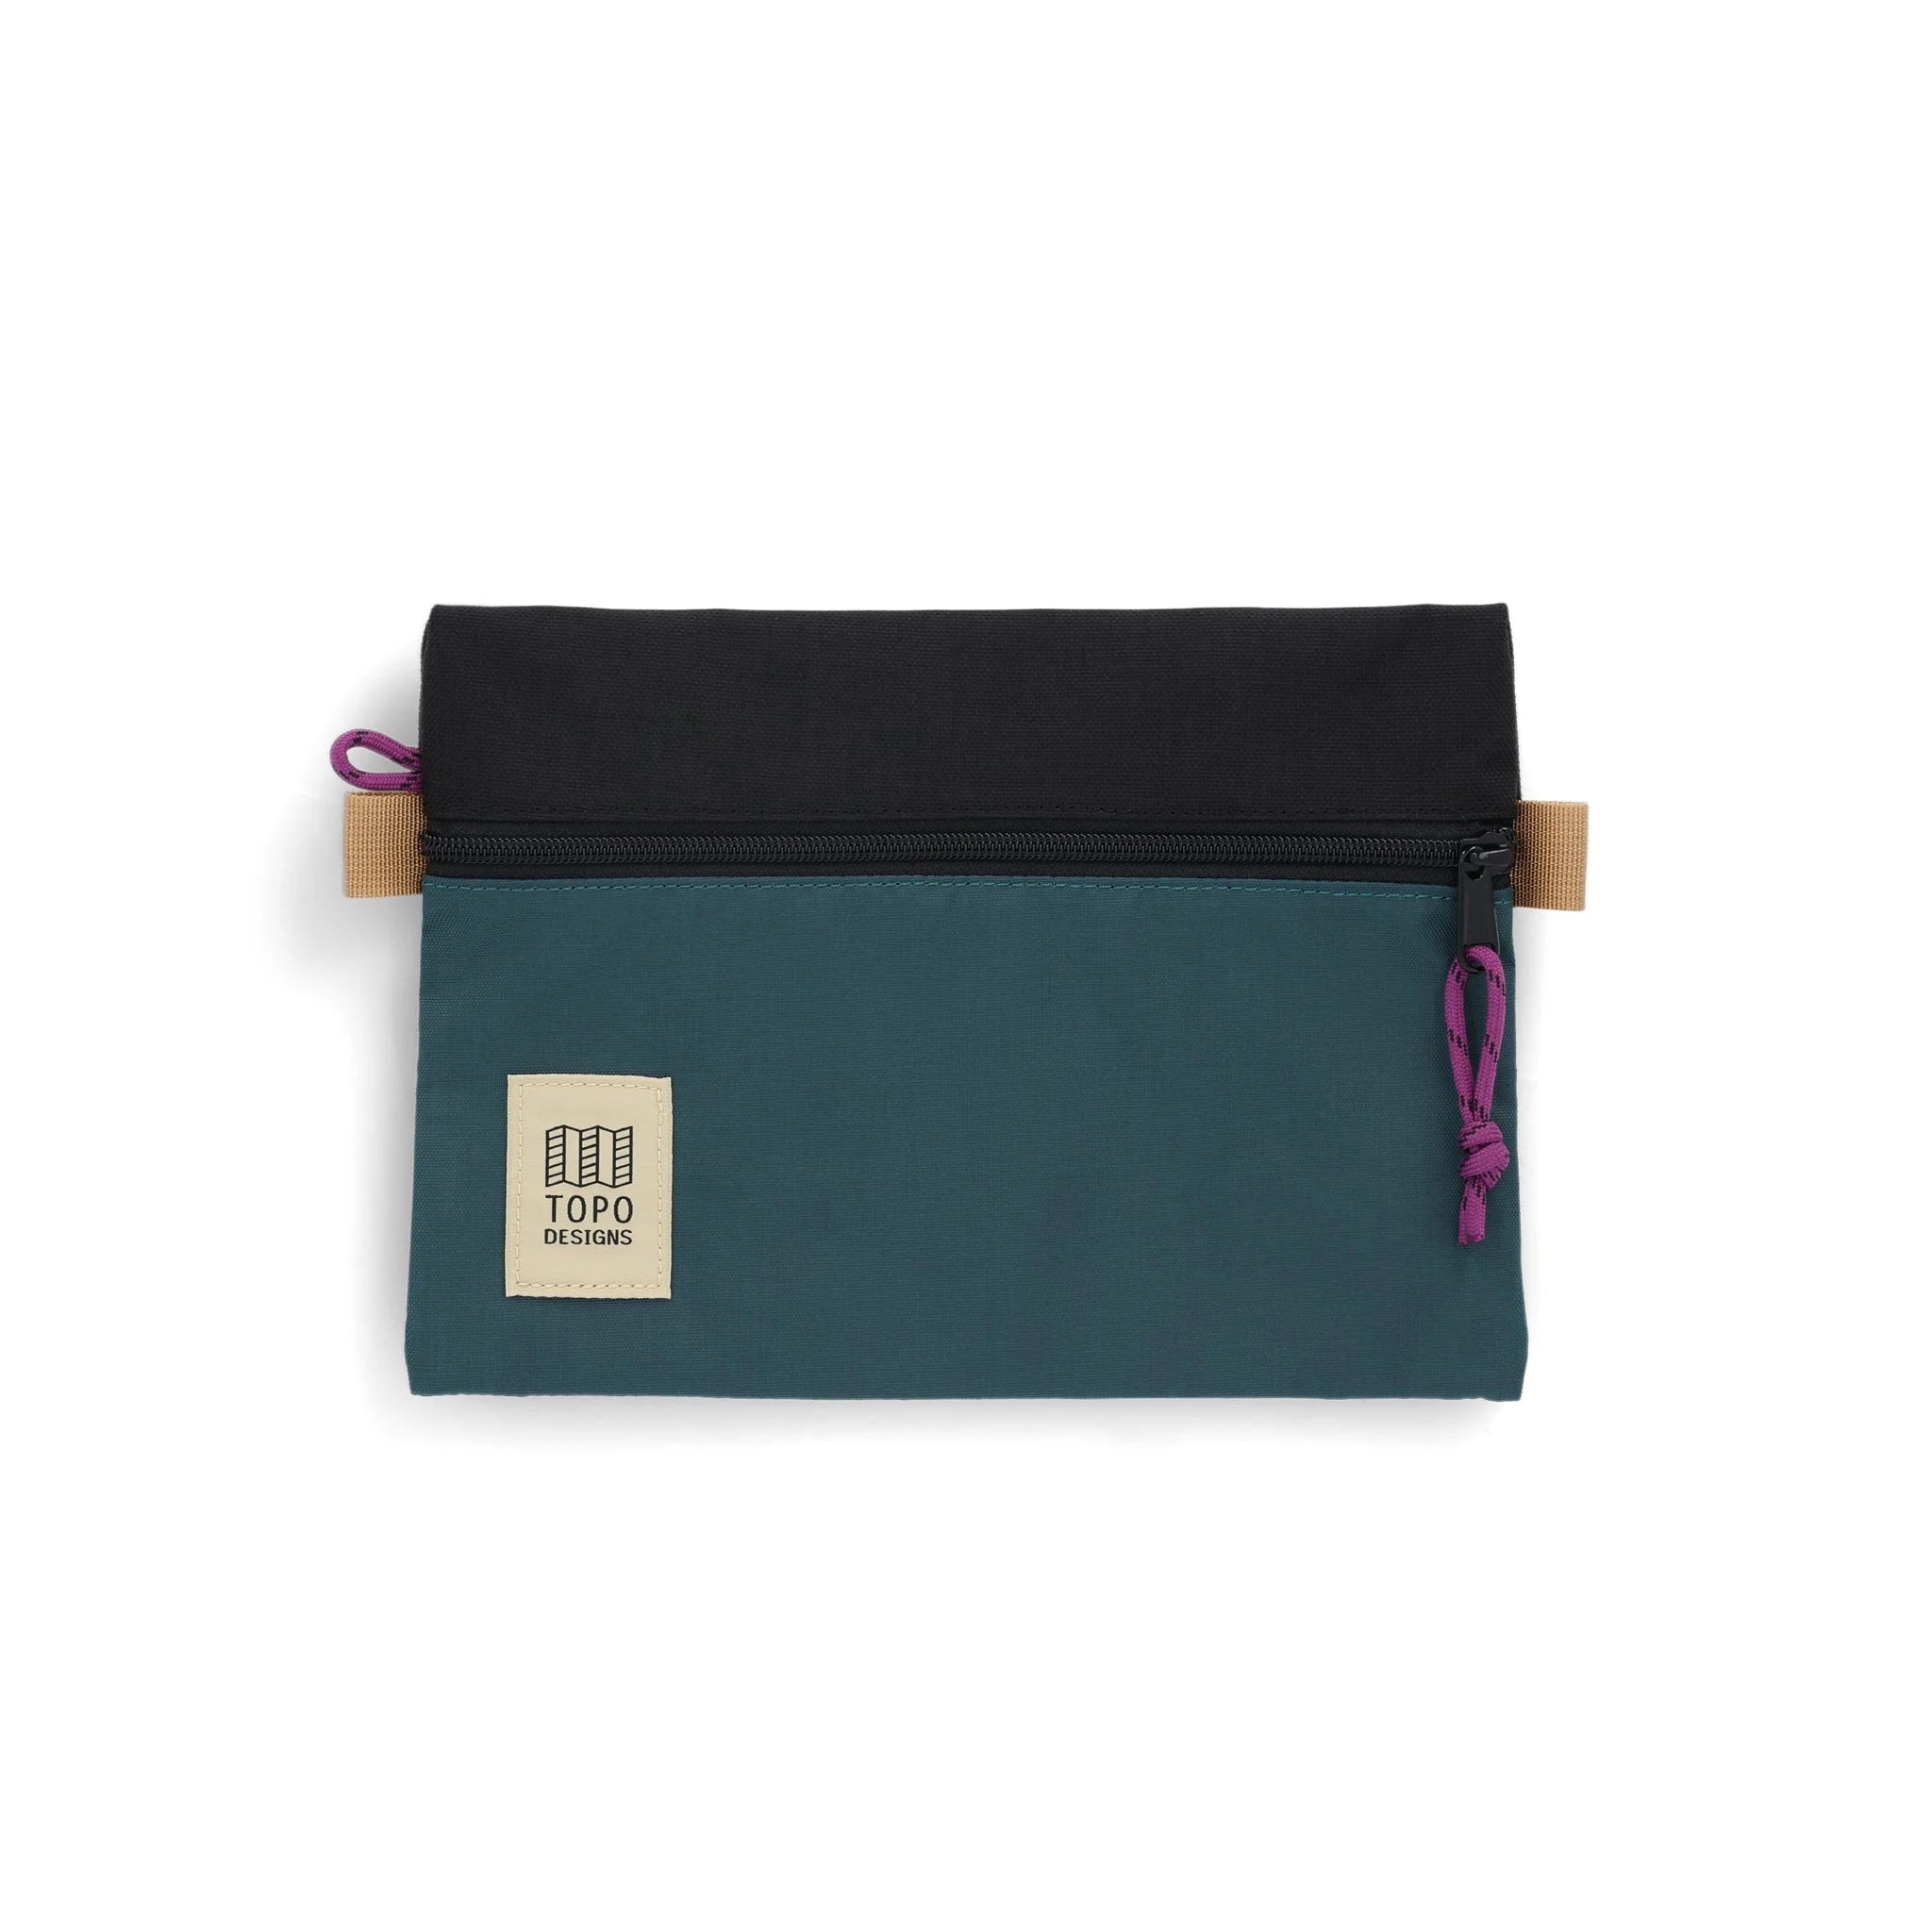 Topo Designs Accessory Medium Bag Kleintasche Topo Designs Botanic Green/Black 